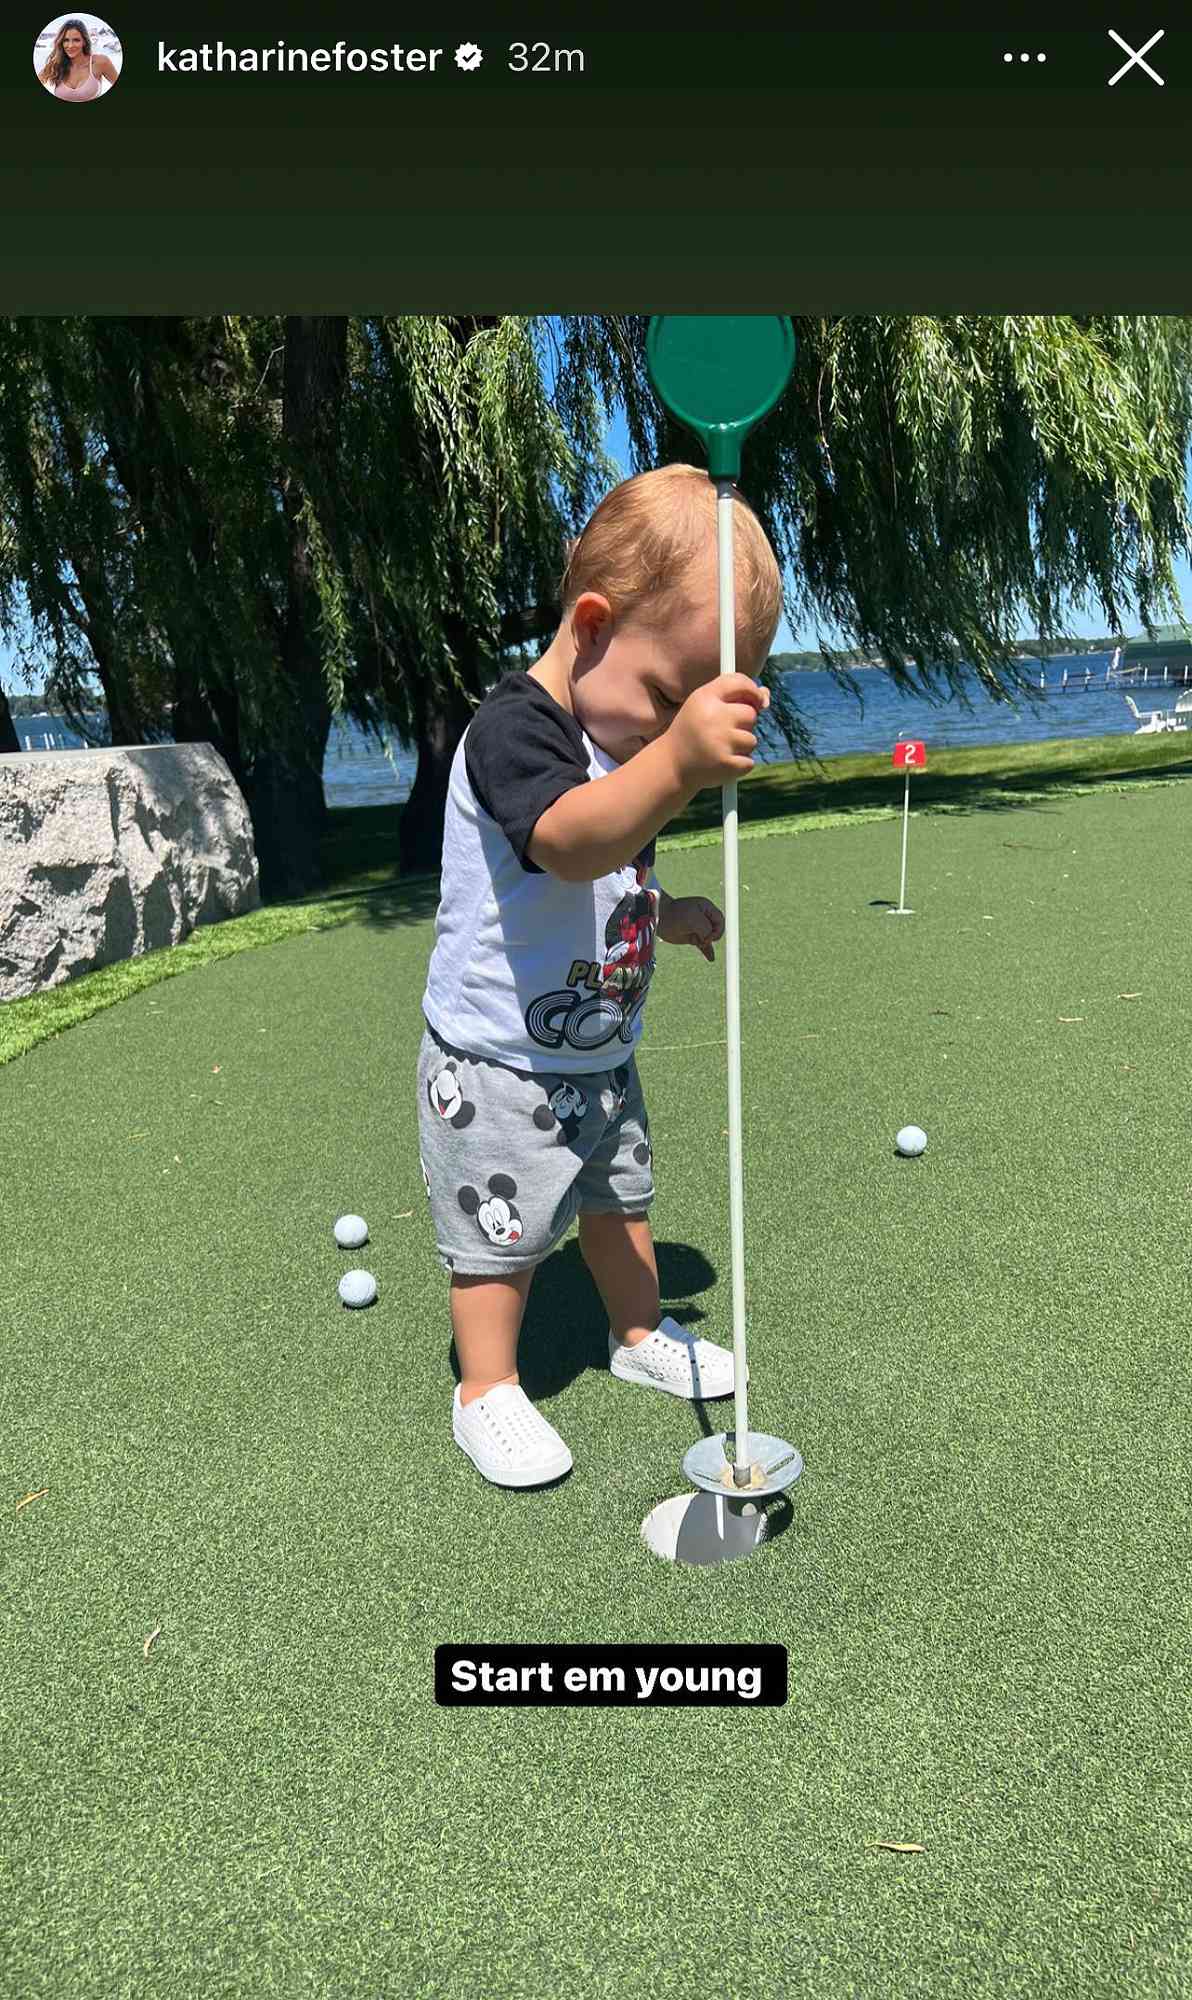 Katharine McPhee Shares Photo of Son Rennie on Golf Course